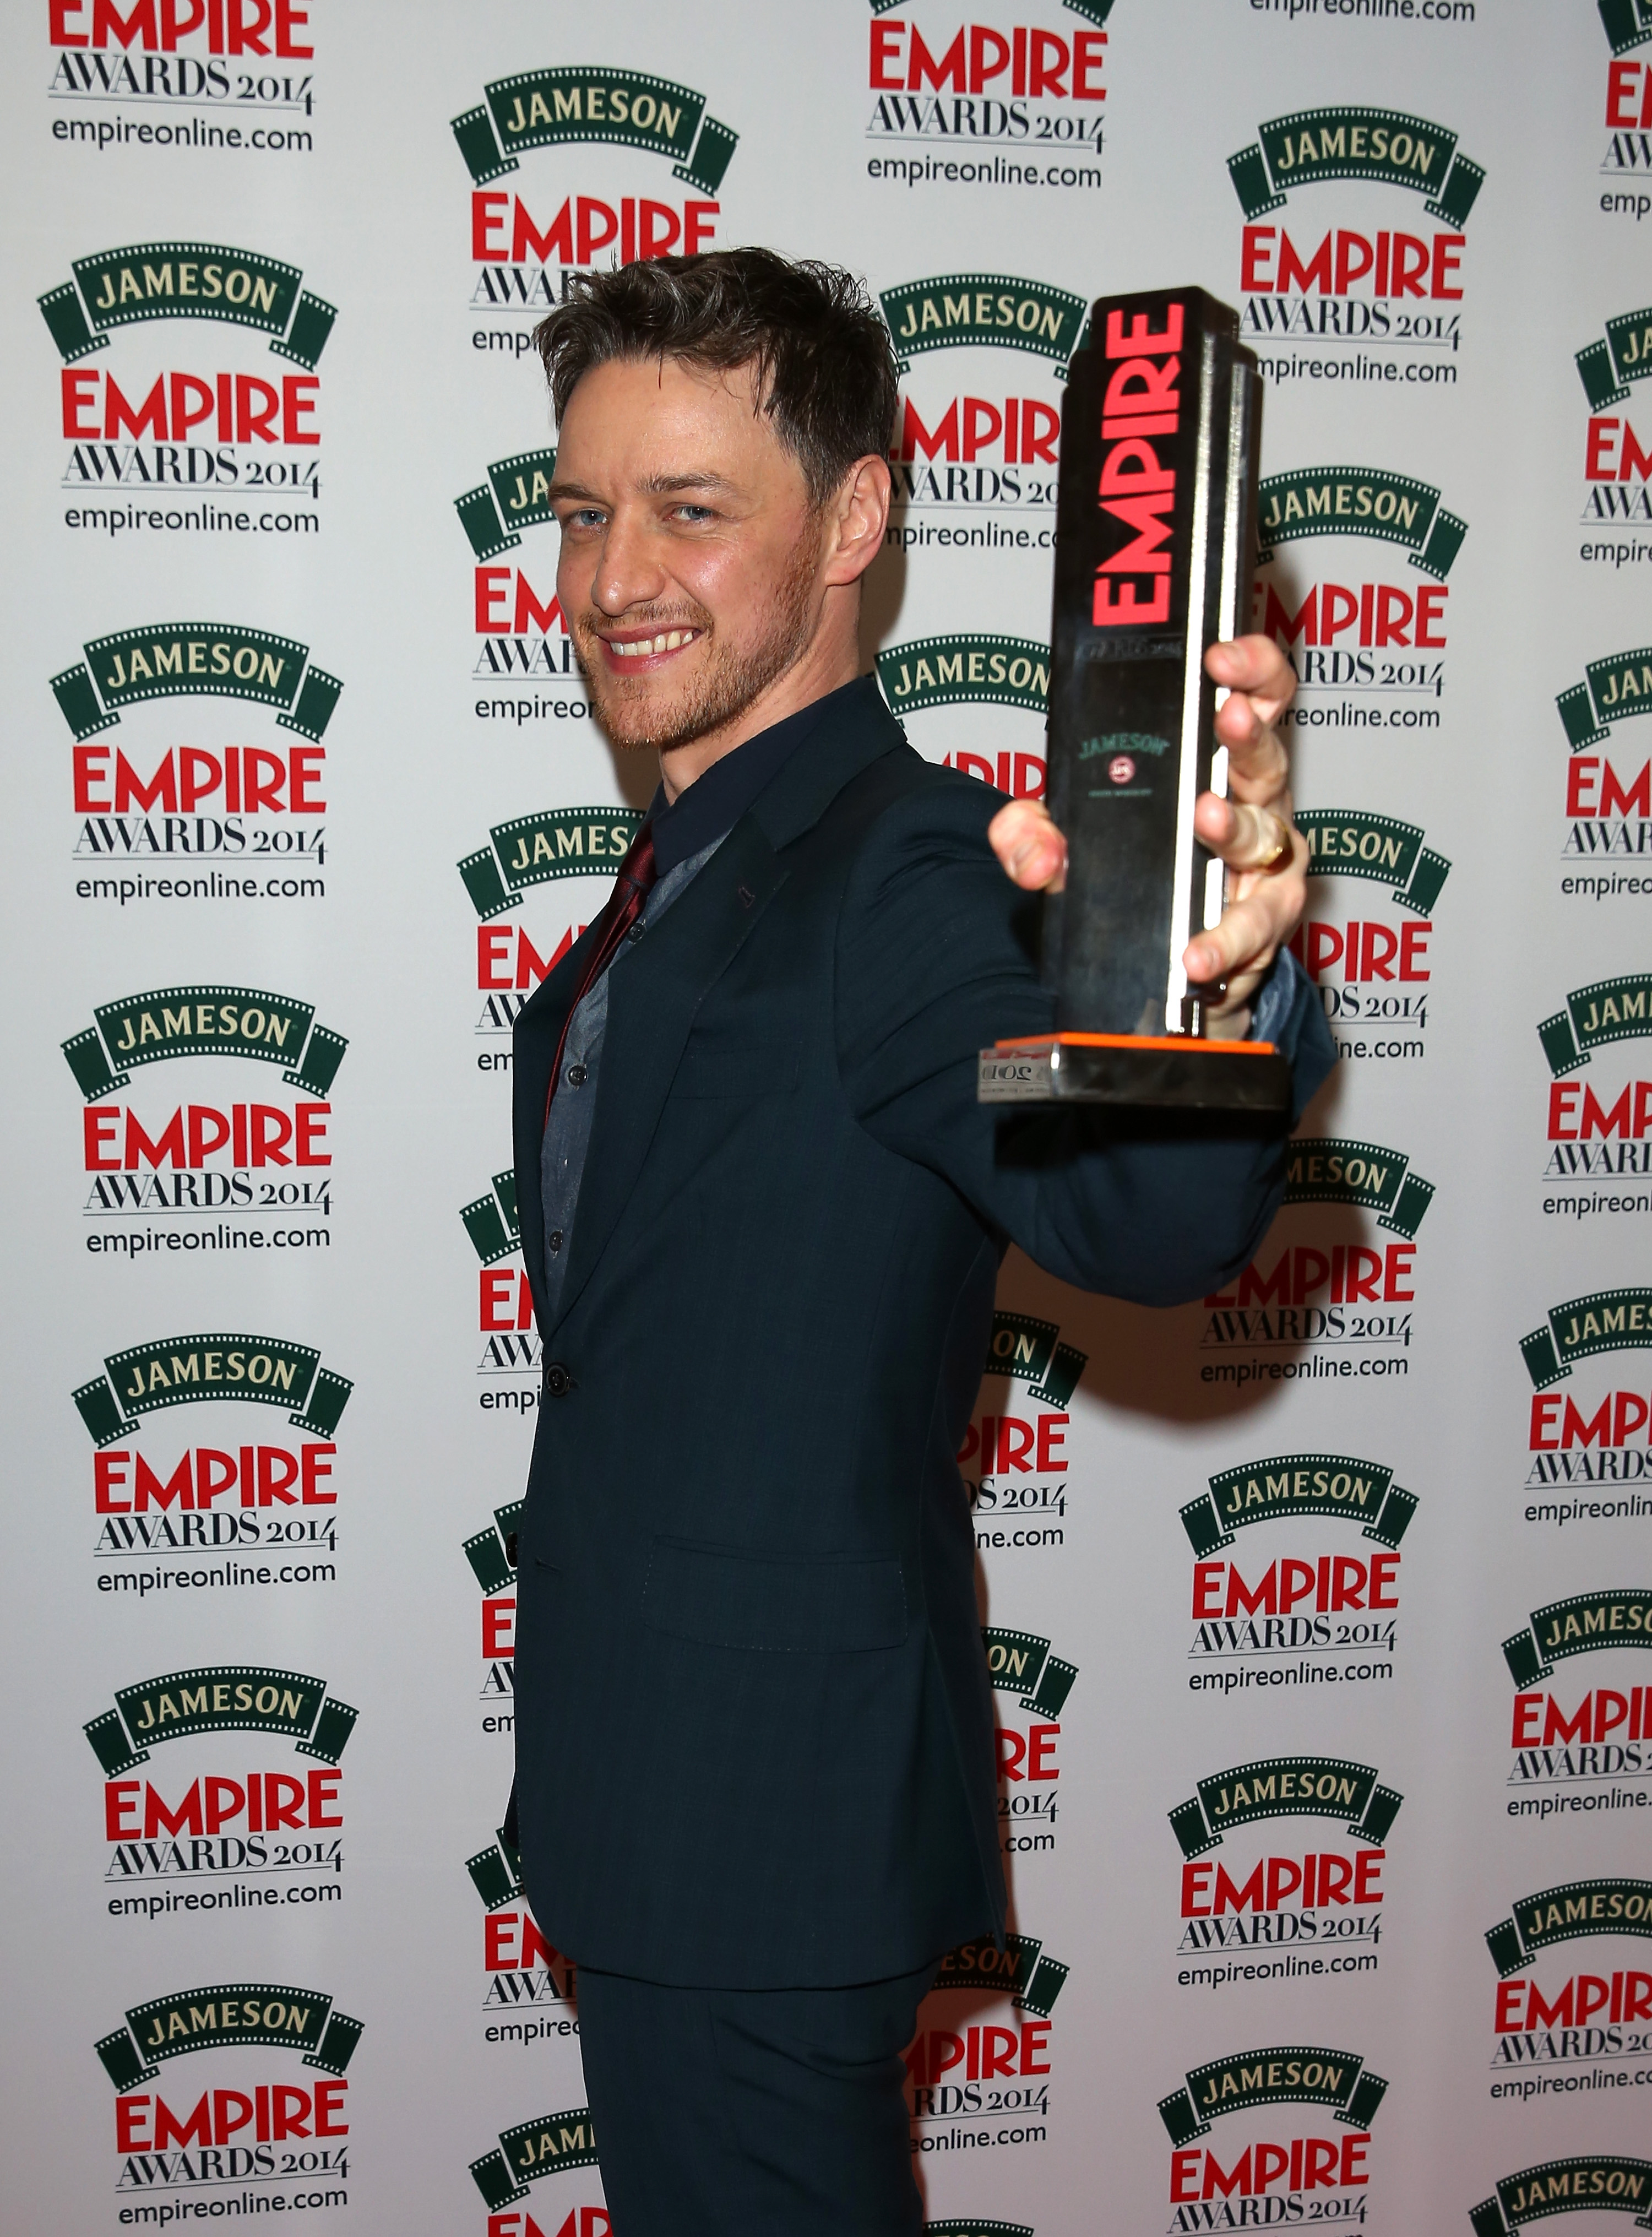 Jameson Empire Awards 2014